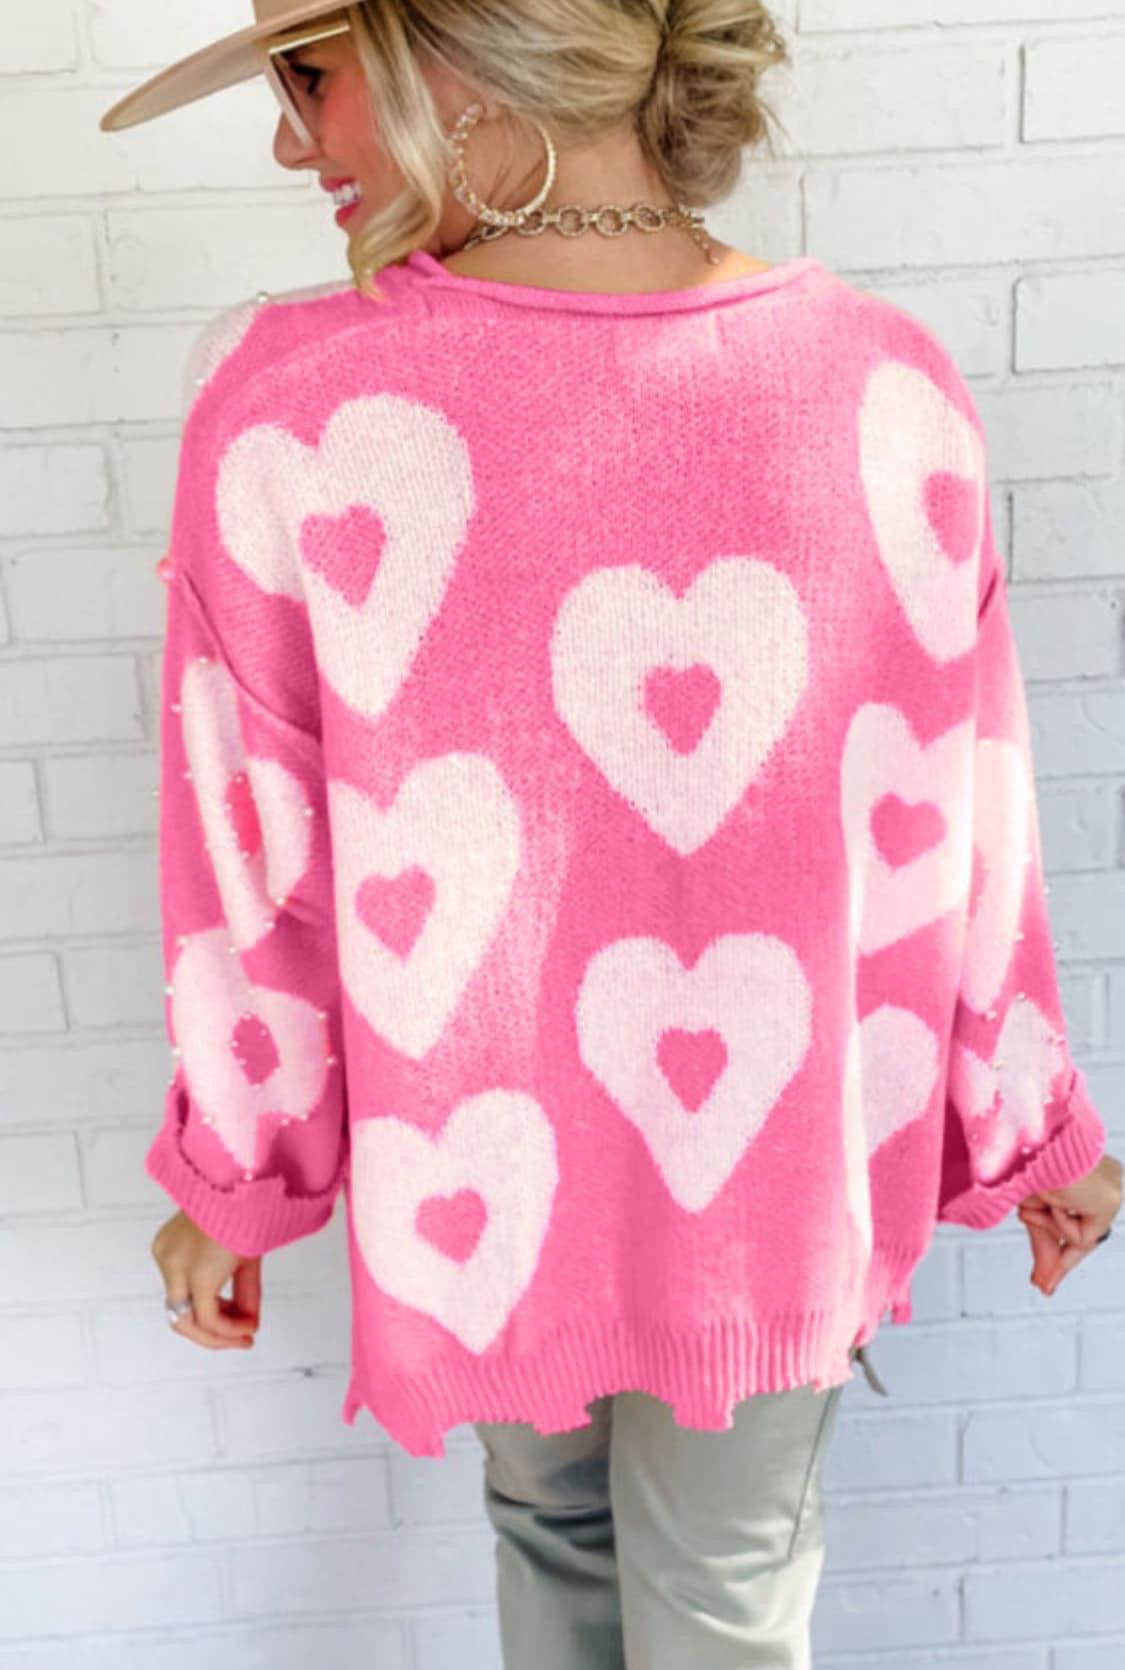 Pearl beaded heart sweater